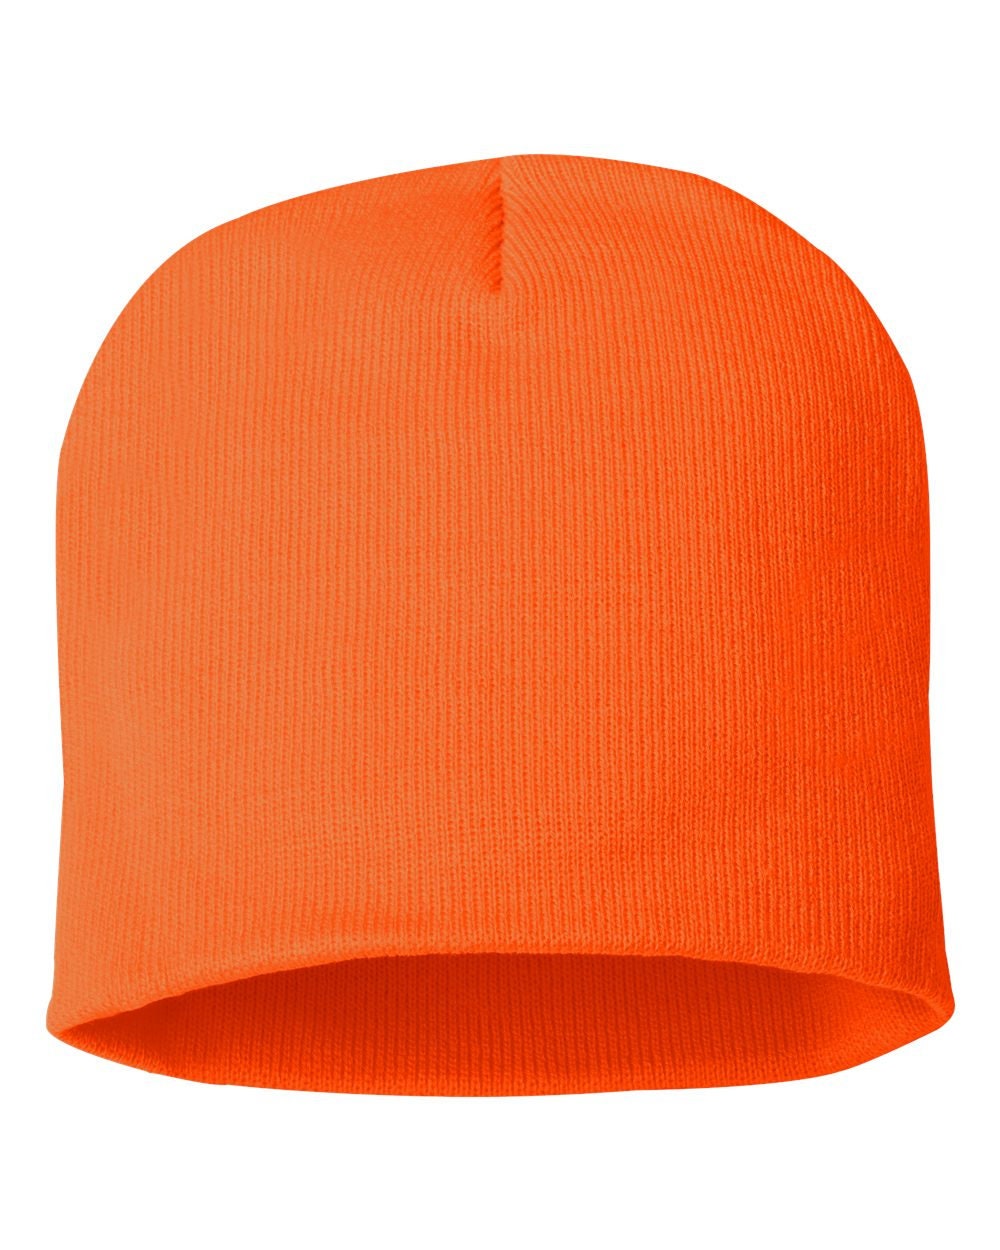 Beanie Printed - Pale Orange (Designer Mask Included)